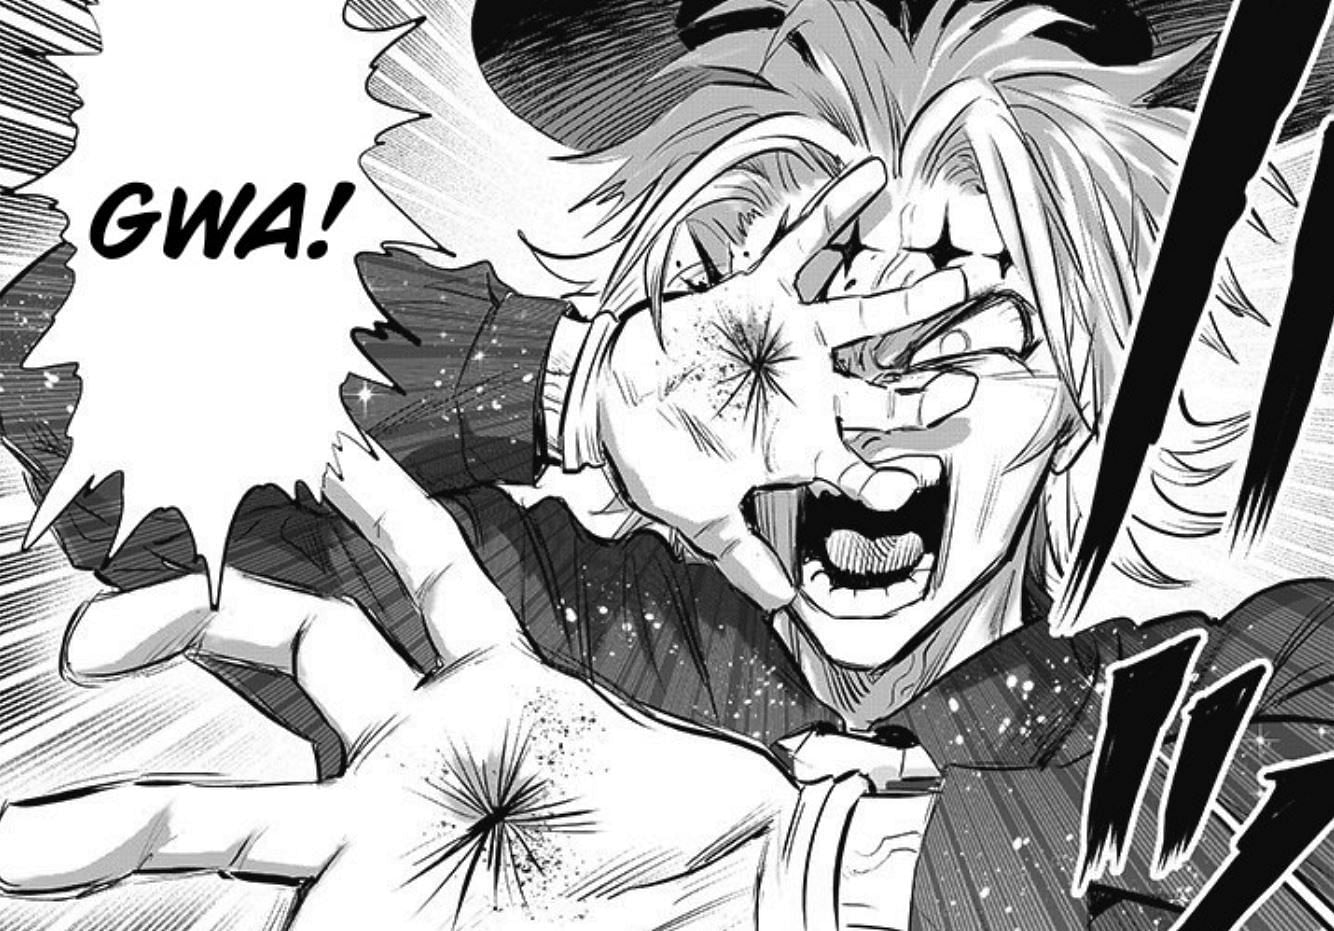 Tsukuyomi member as seen in One Punch Man chapter 177 (Image via Shueisha)